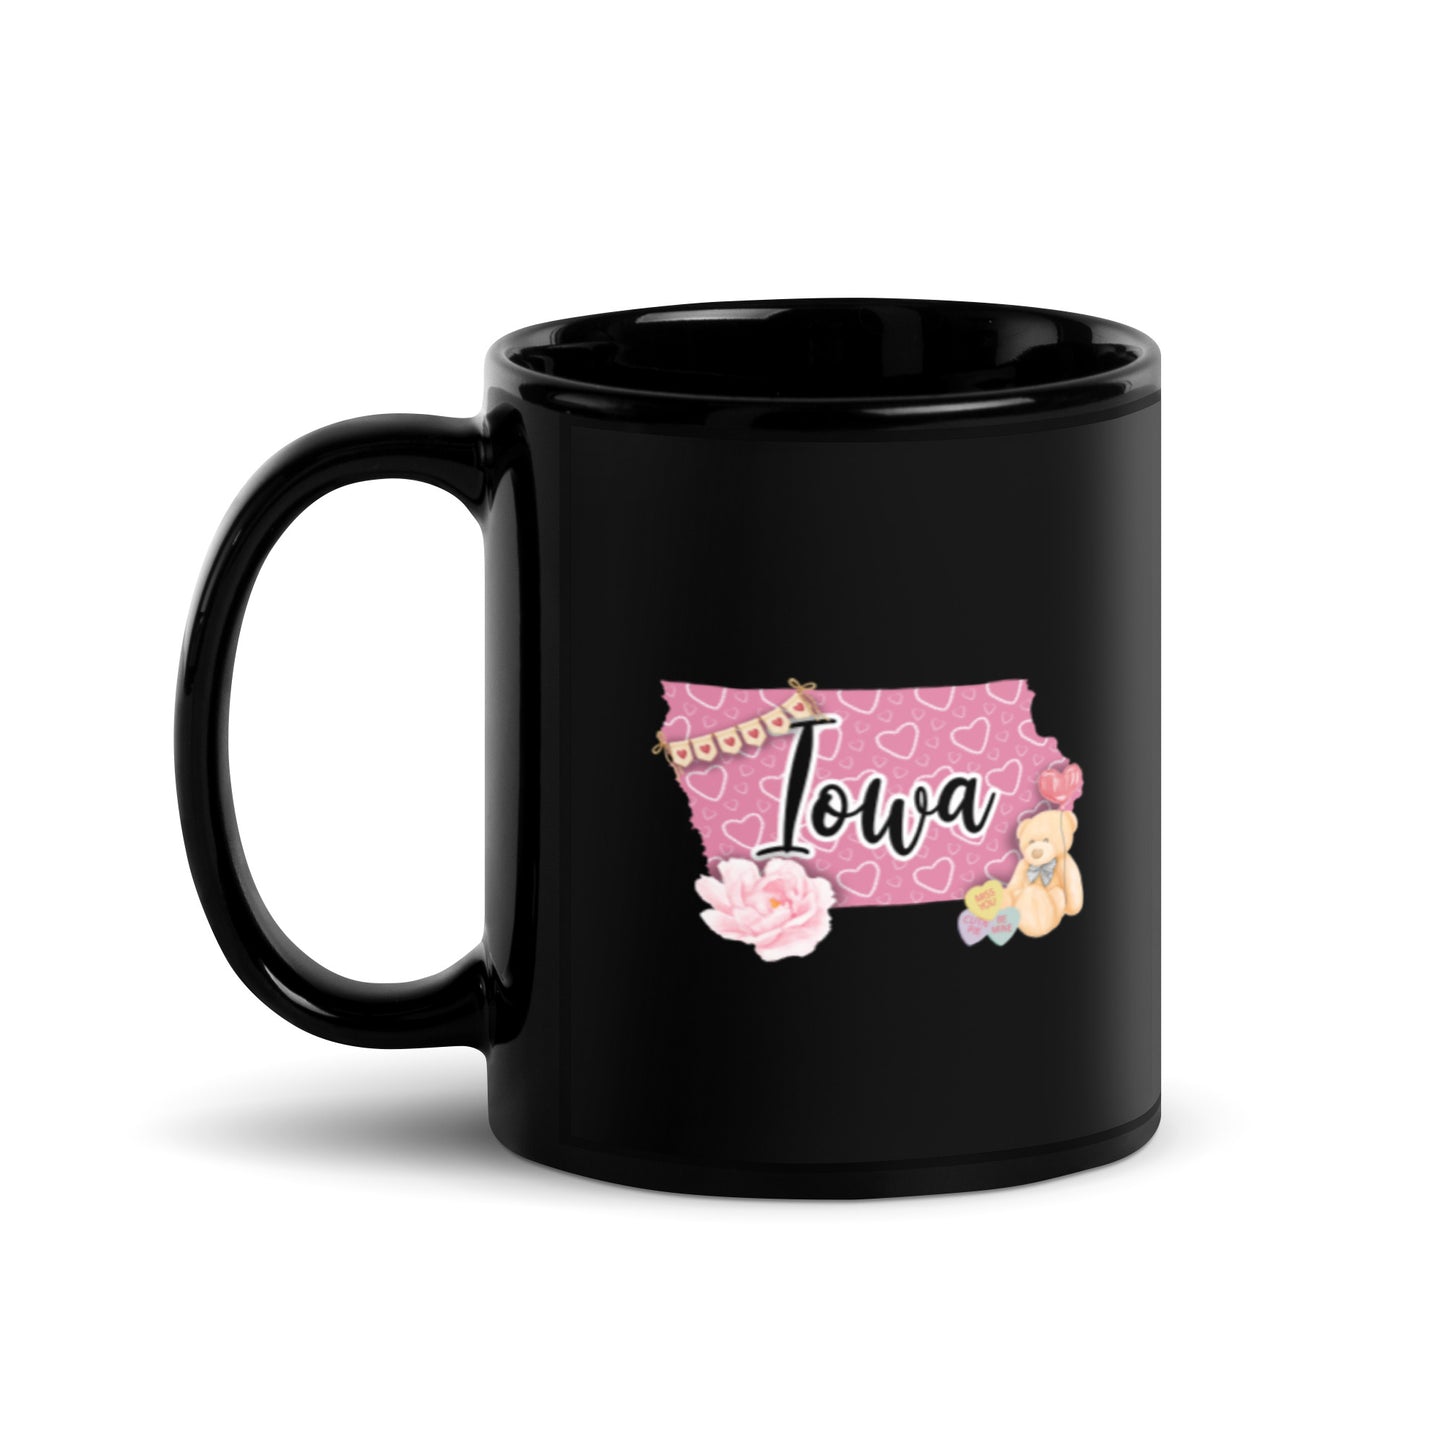 Iowa Valentine Black Glossy Mug